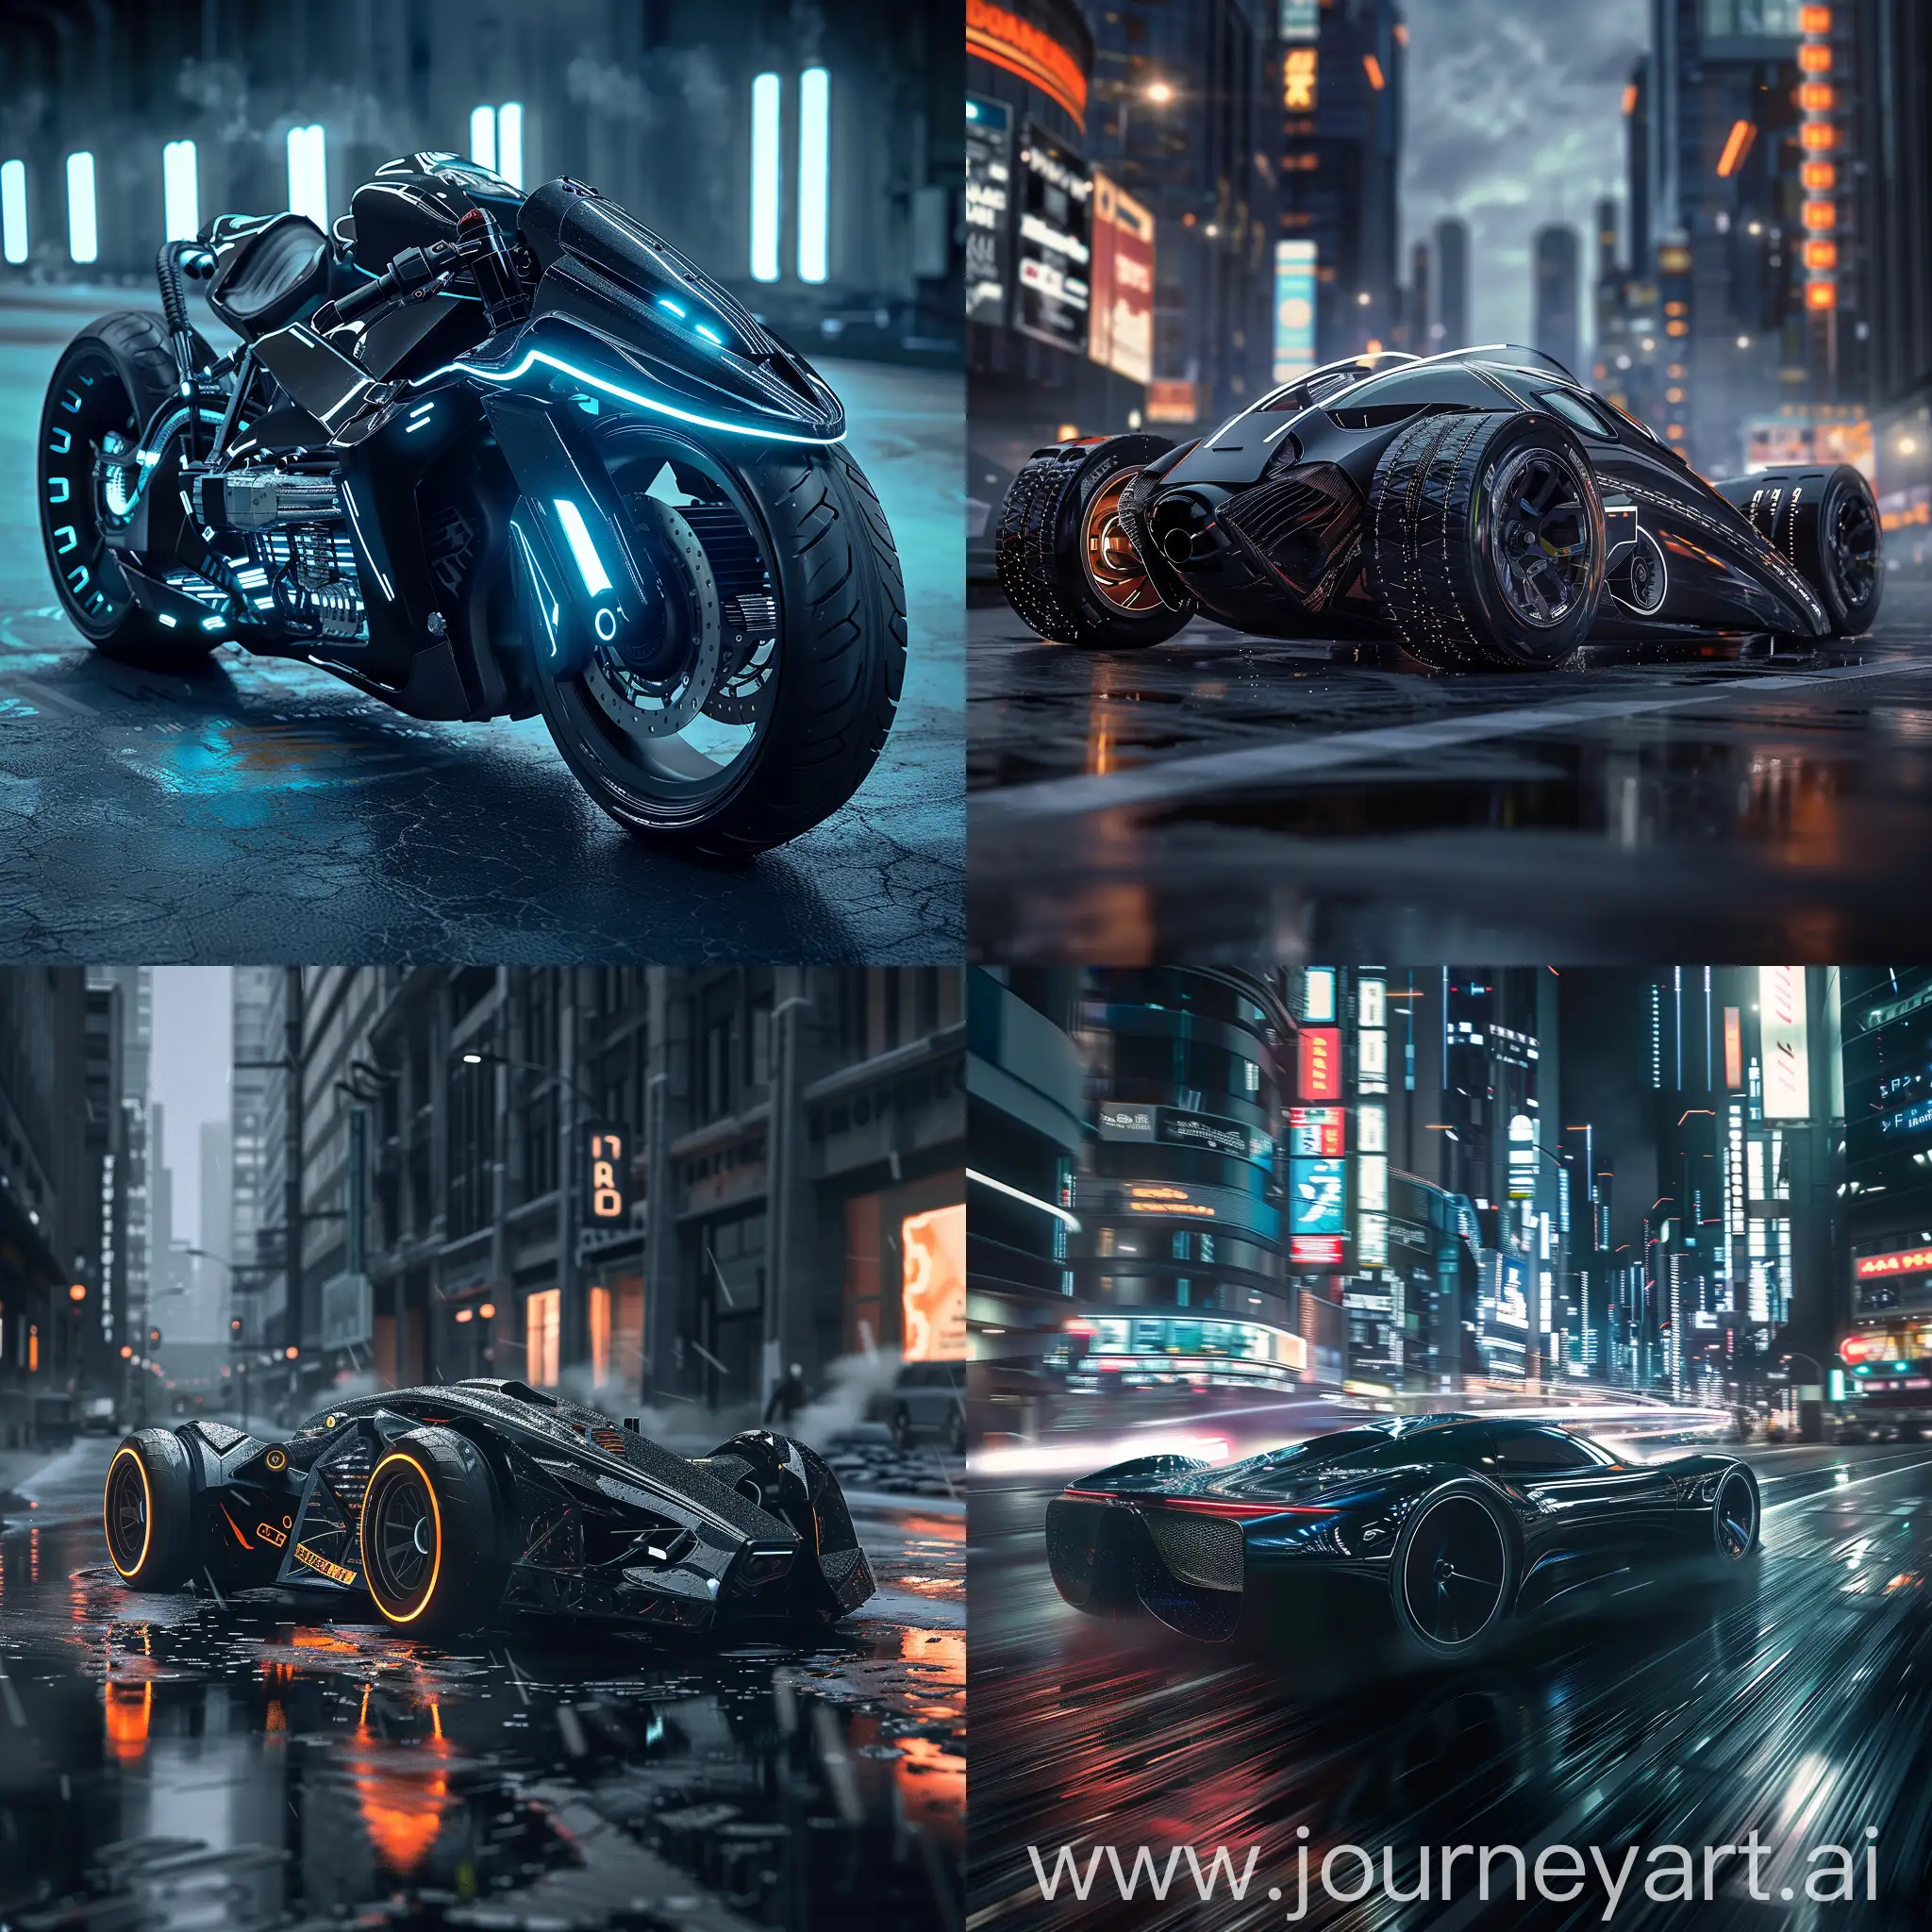 Futuristic-Fantasy-Motorbike-Racing-in-Realistic-Aesthetic-HD-Wallpaper